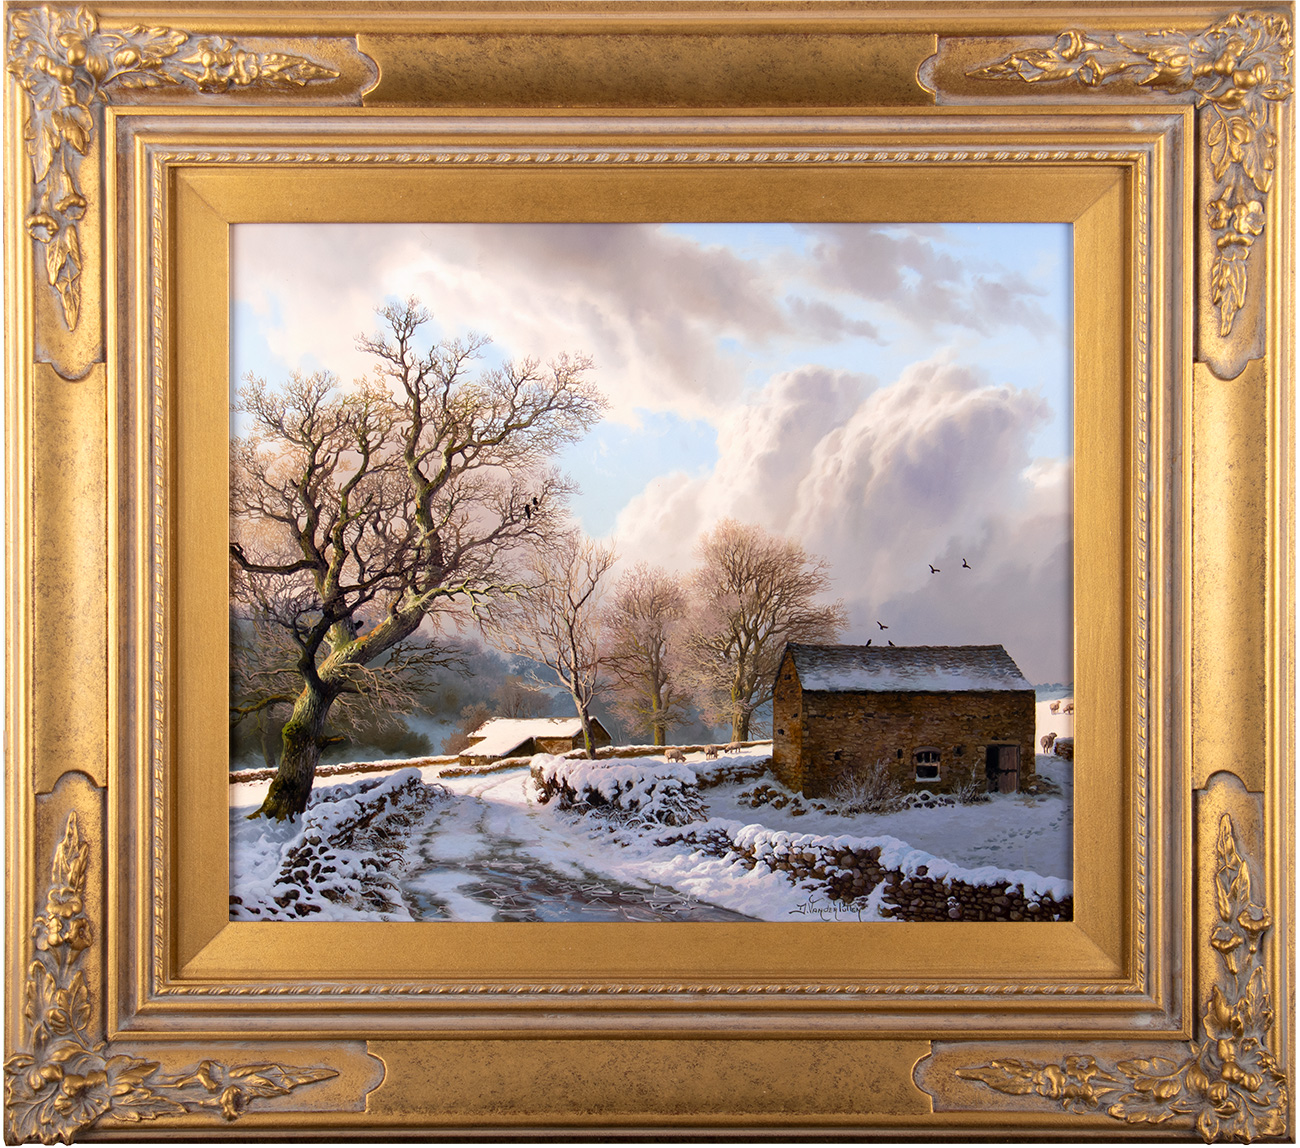 Daniel Van Der Putten, Original oil painting on panel, Winter on B6160, Kettlewell, click to enlarge